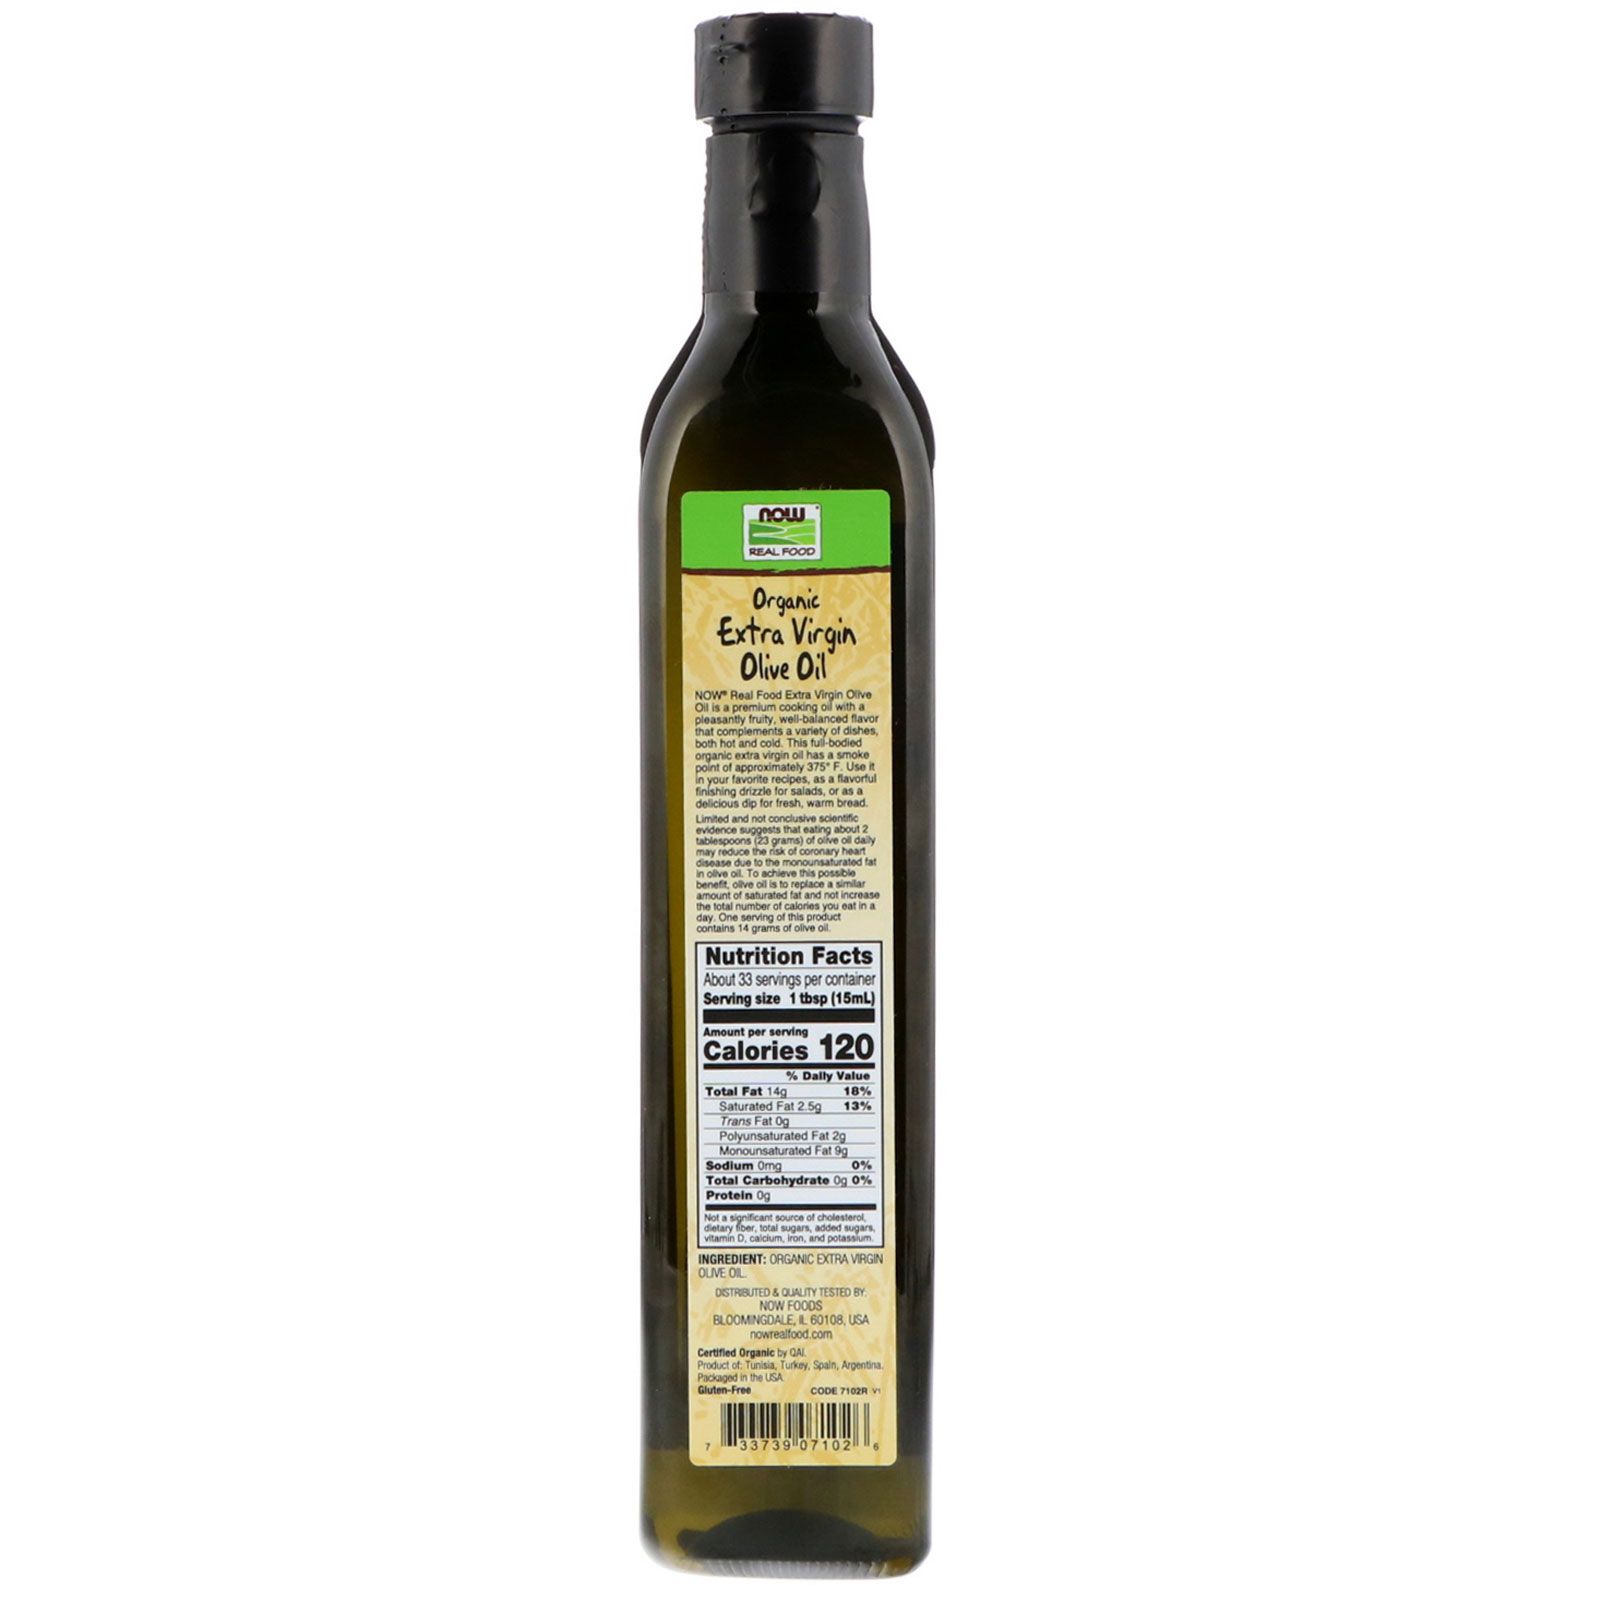 Фуд масло. Оливковое масло первого холодного отжима San Domenico 500мл. Масло Macadamia nut Oil. Avocado Oil 500 ml. Масло авокадо 1 отжима.